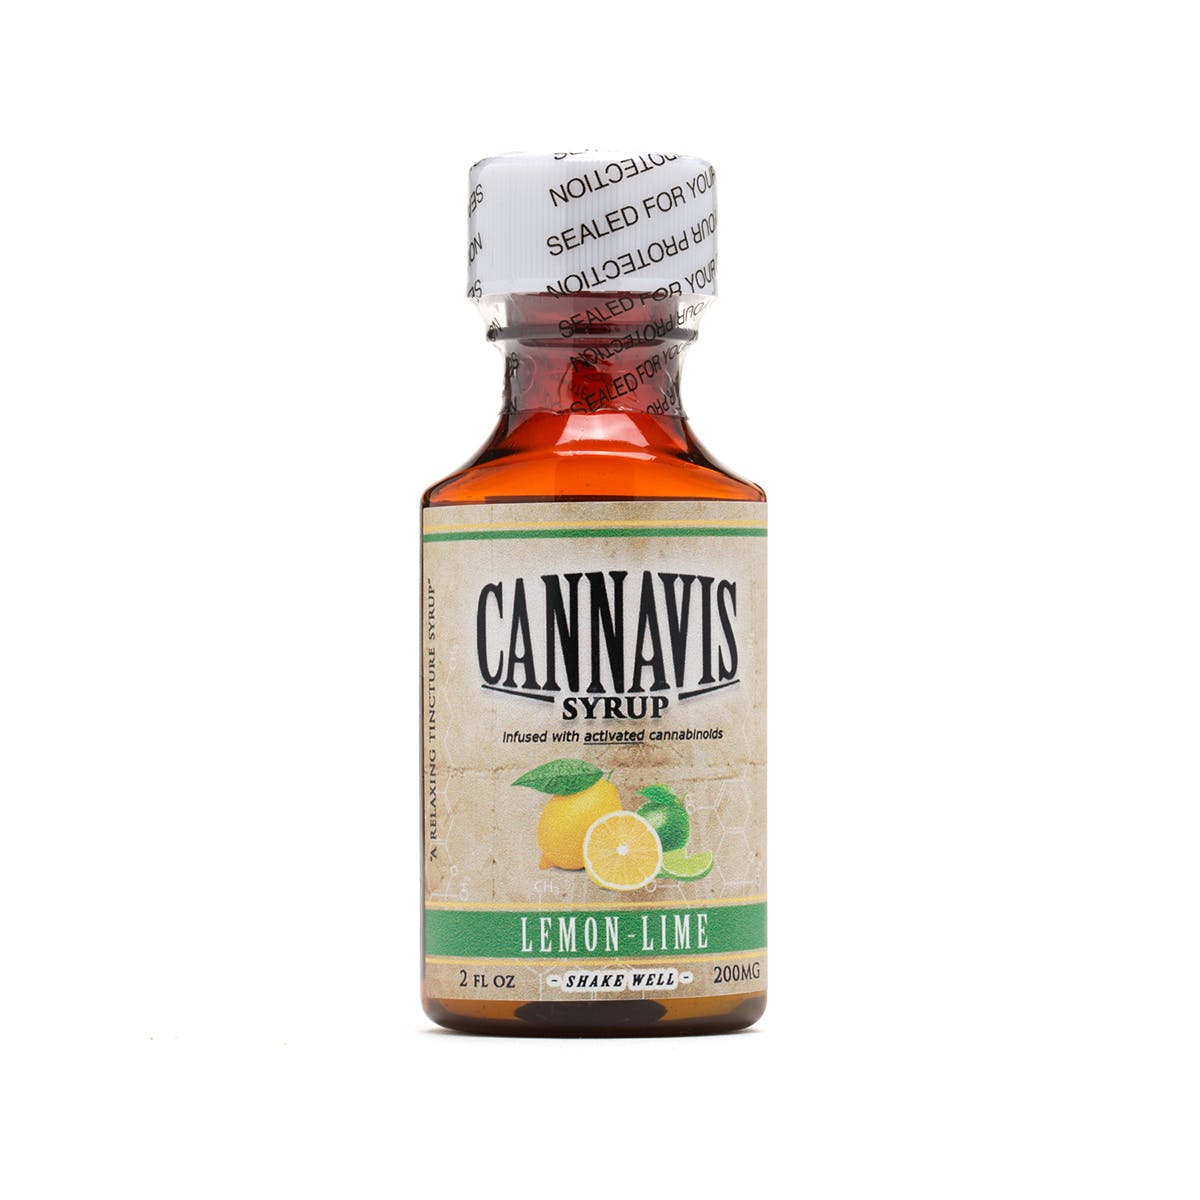 marijuana-dispensaries-high-society-wellness-center-in-los-angeles-cannavis-syrup-2c-lemon-lime-200mg